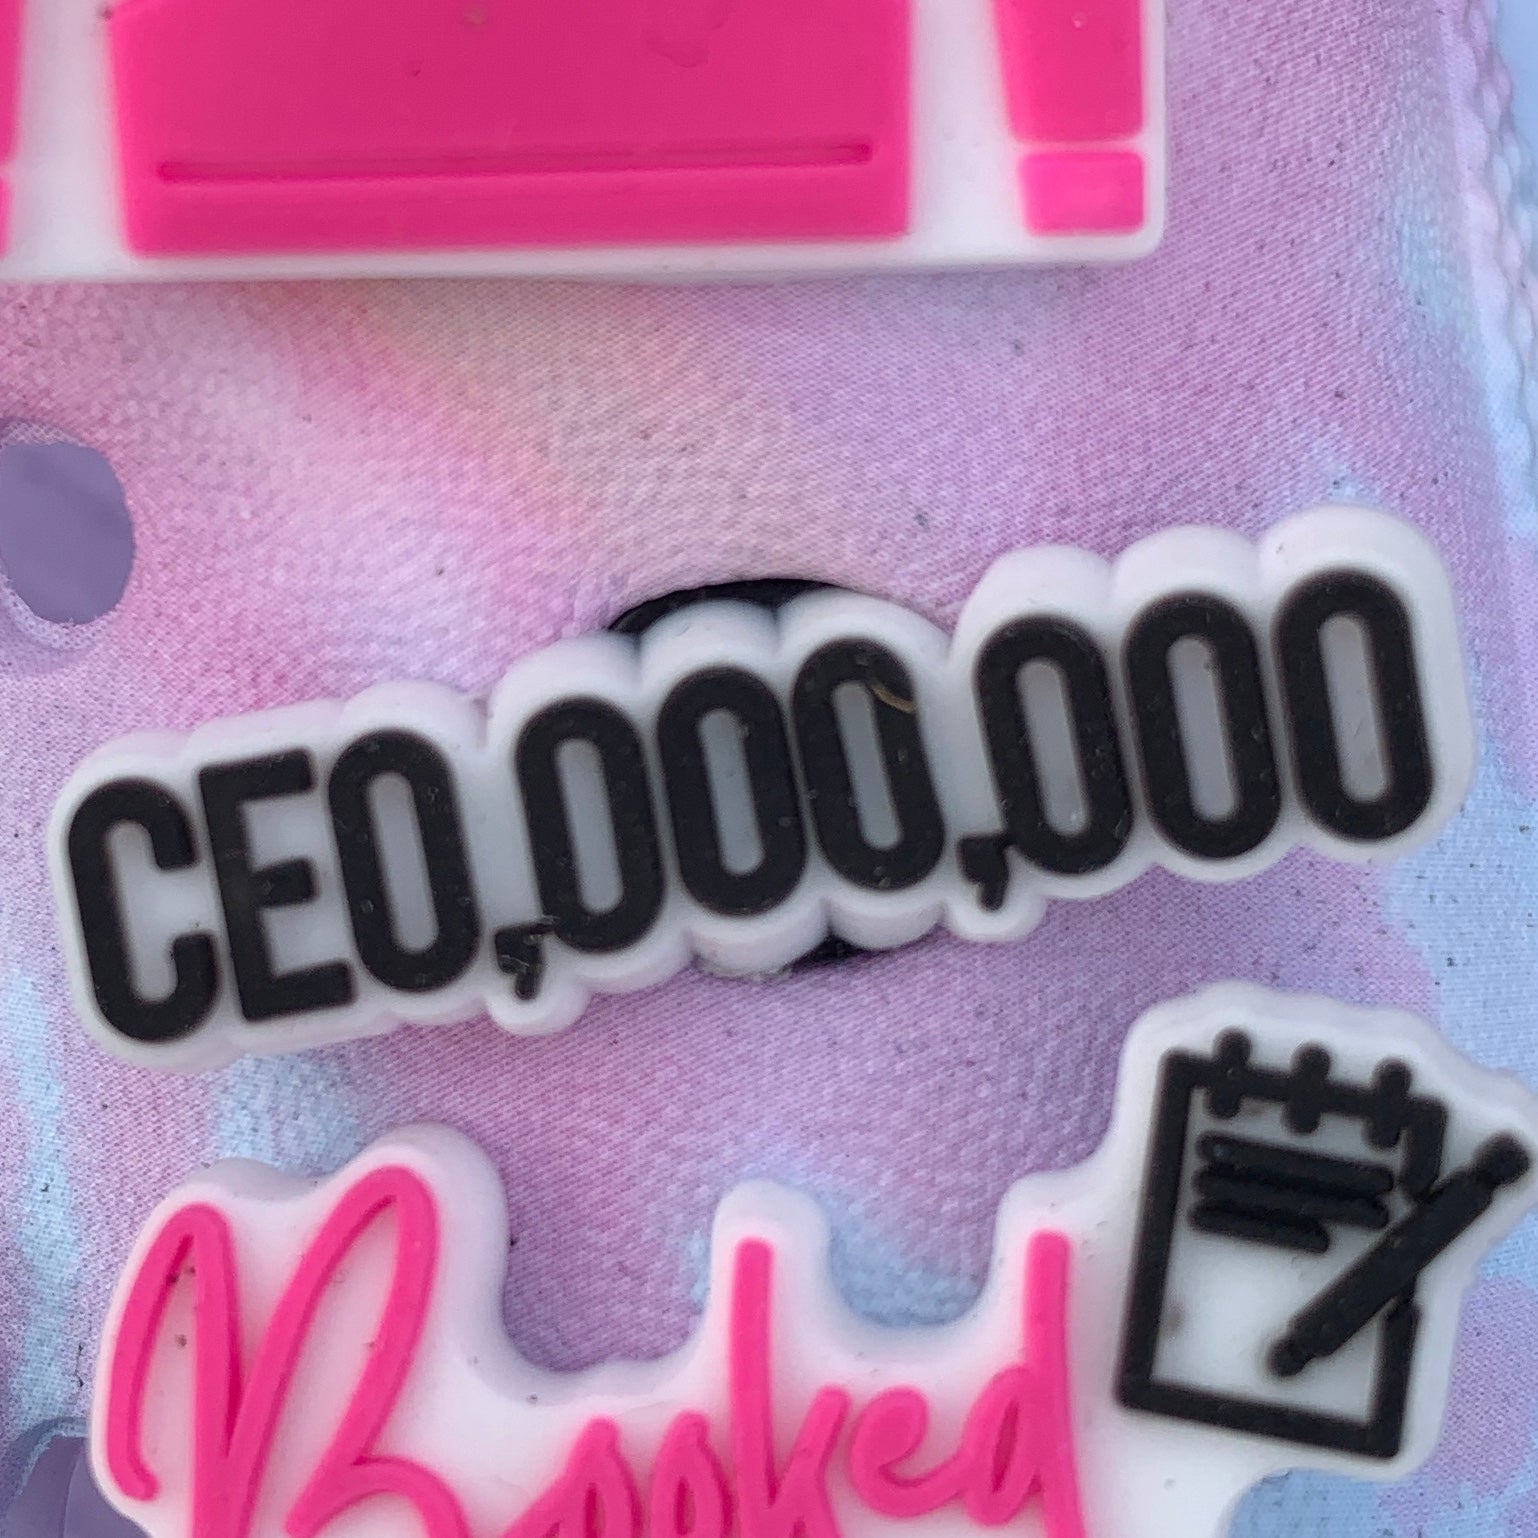 SHOE CHARMS - CEO,000,000 - ShoeNami